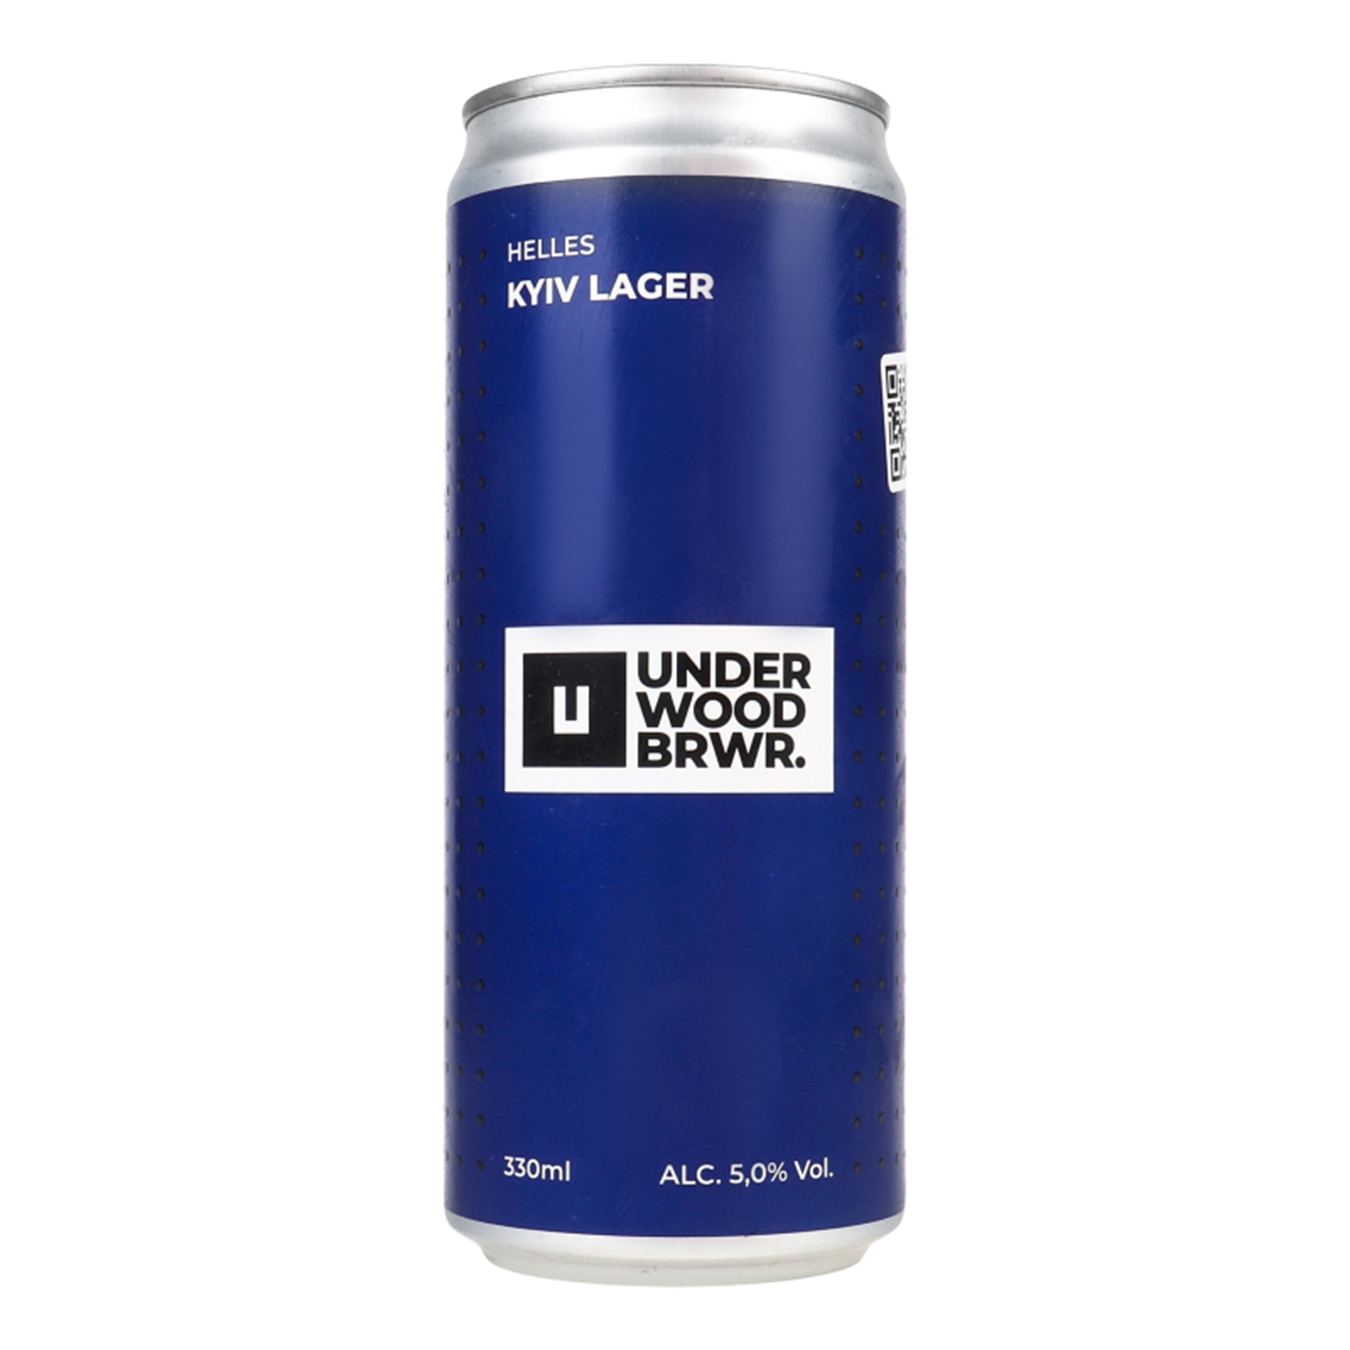 Пиво светлое Underwood BREWERY Kyiv Lager 5% 0,33л железная банка